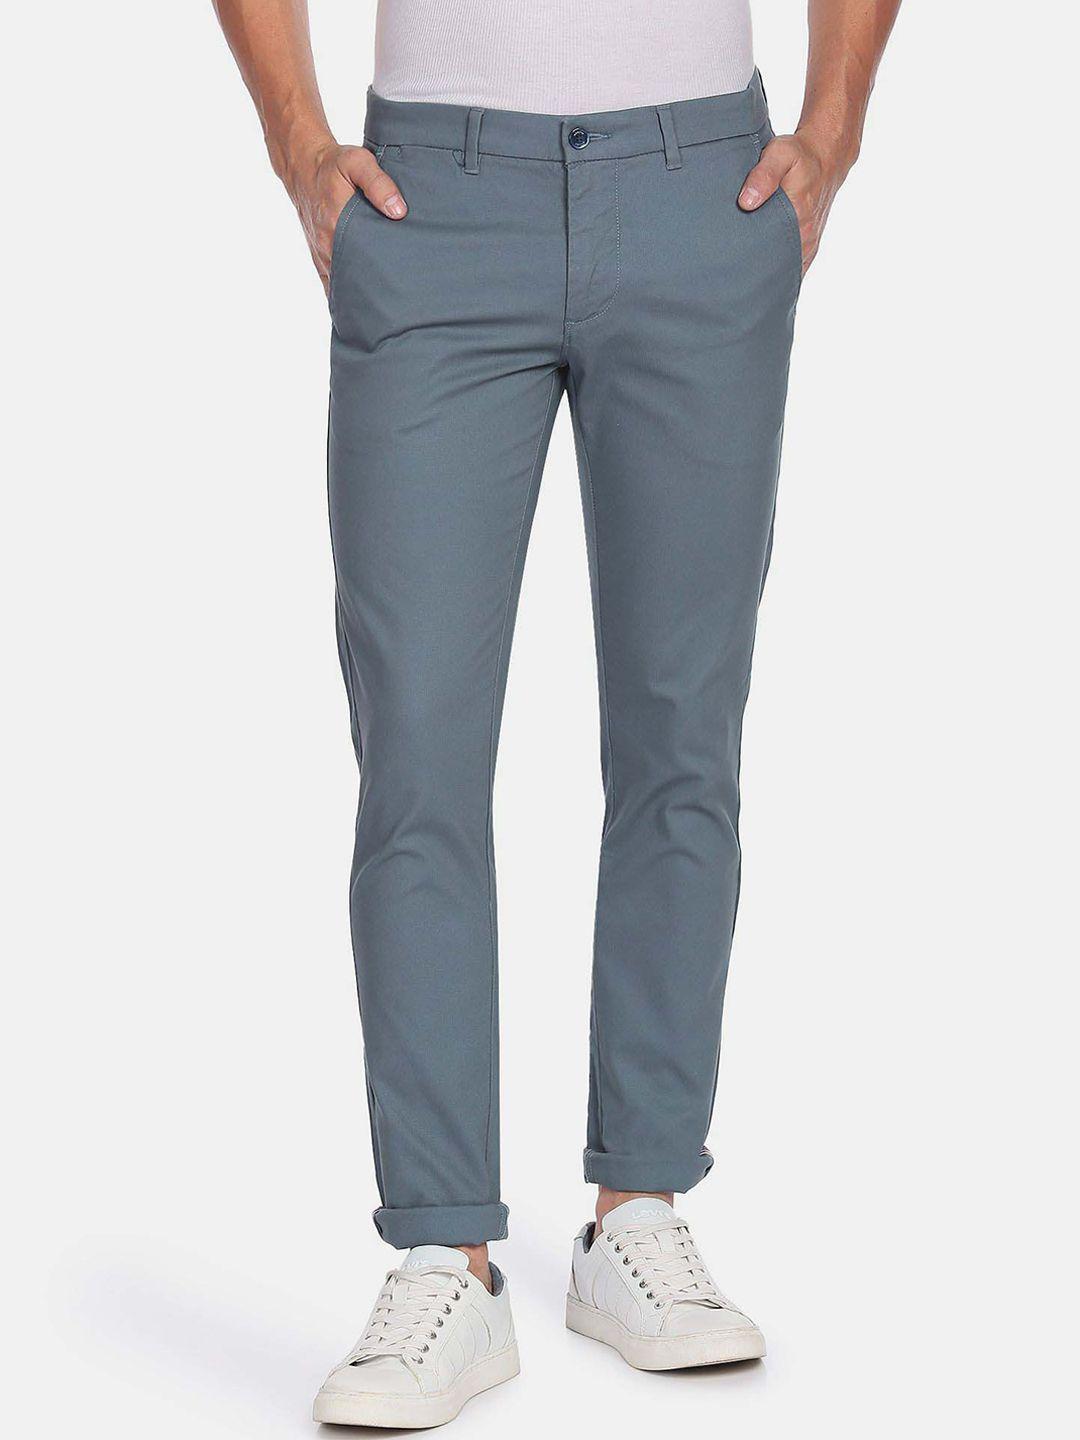 arrow-sport-men-slim-fit-low-rise-chinos-trousers